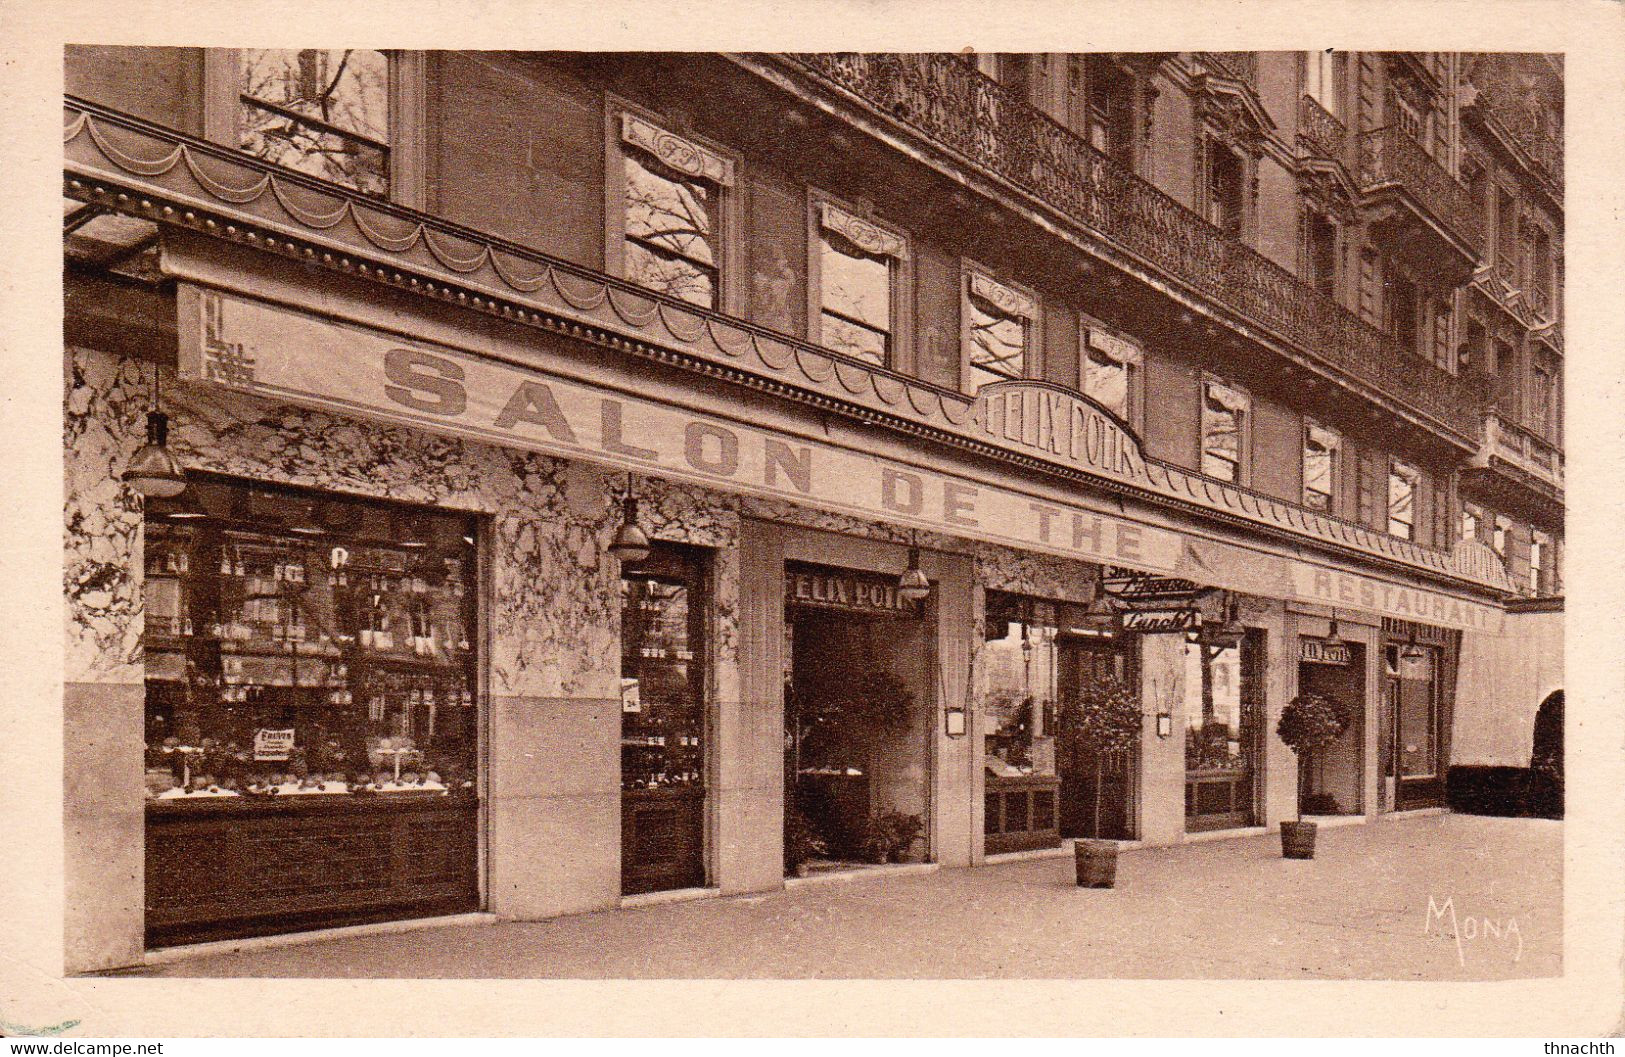 PARIS (Seine) - Restaurant, Salon De Thé, Bar "Saint-Augustin" - 43 Boulevard Malesherbes - Bar, Alberghi, Ristoranti